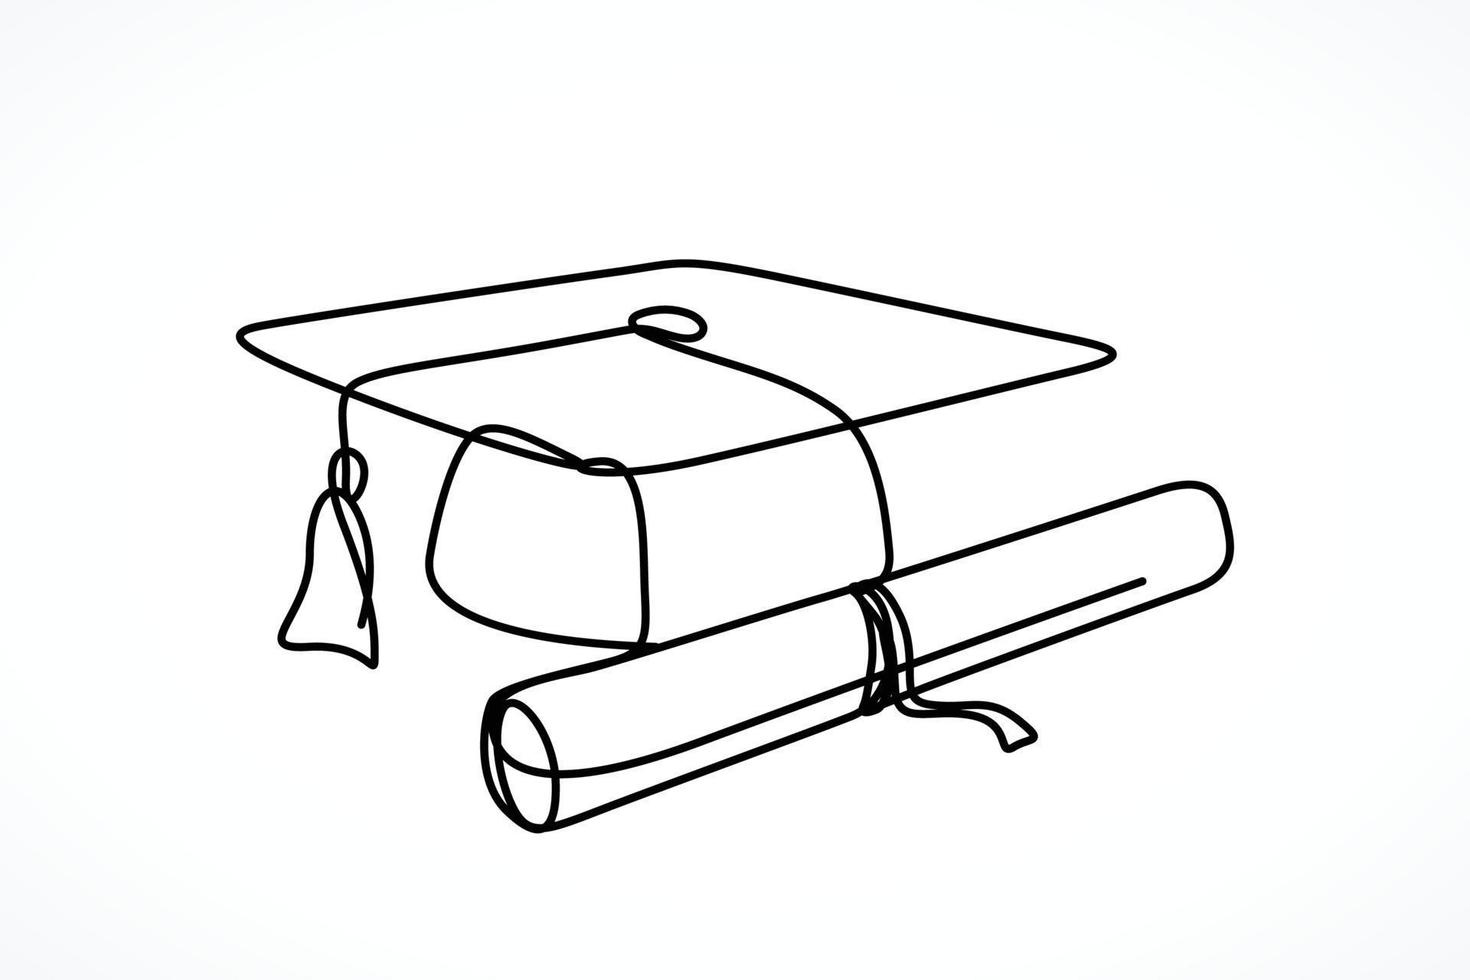 One line drawing of graduation cap vector